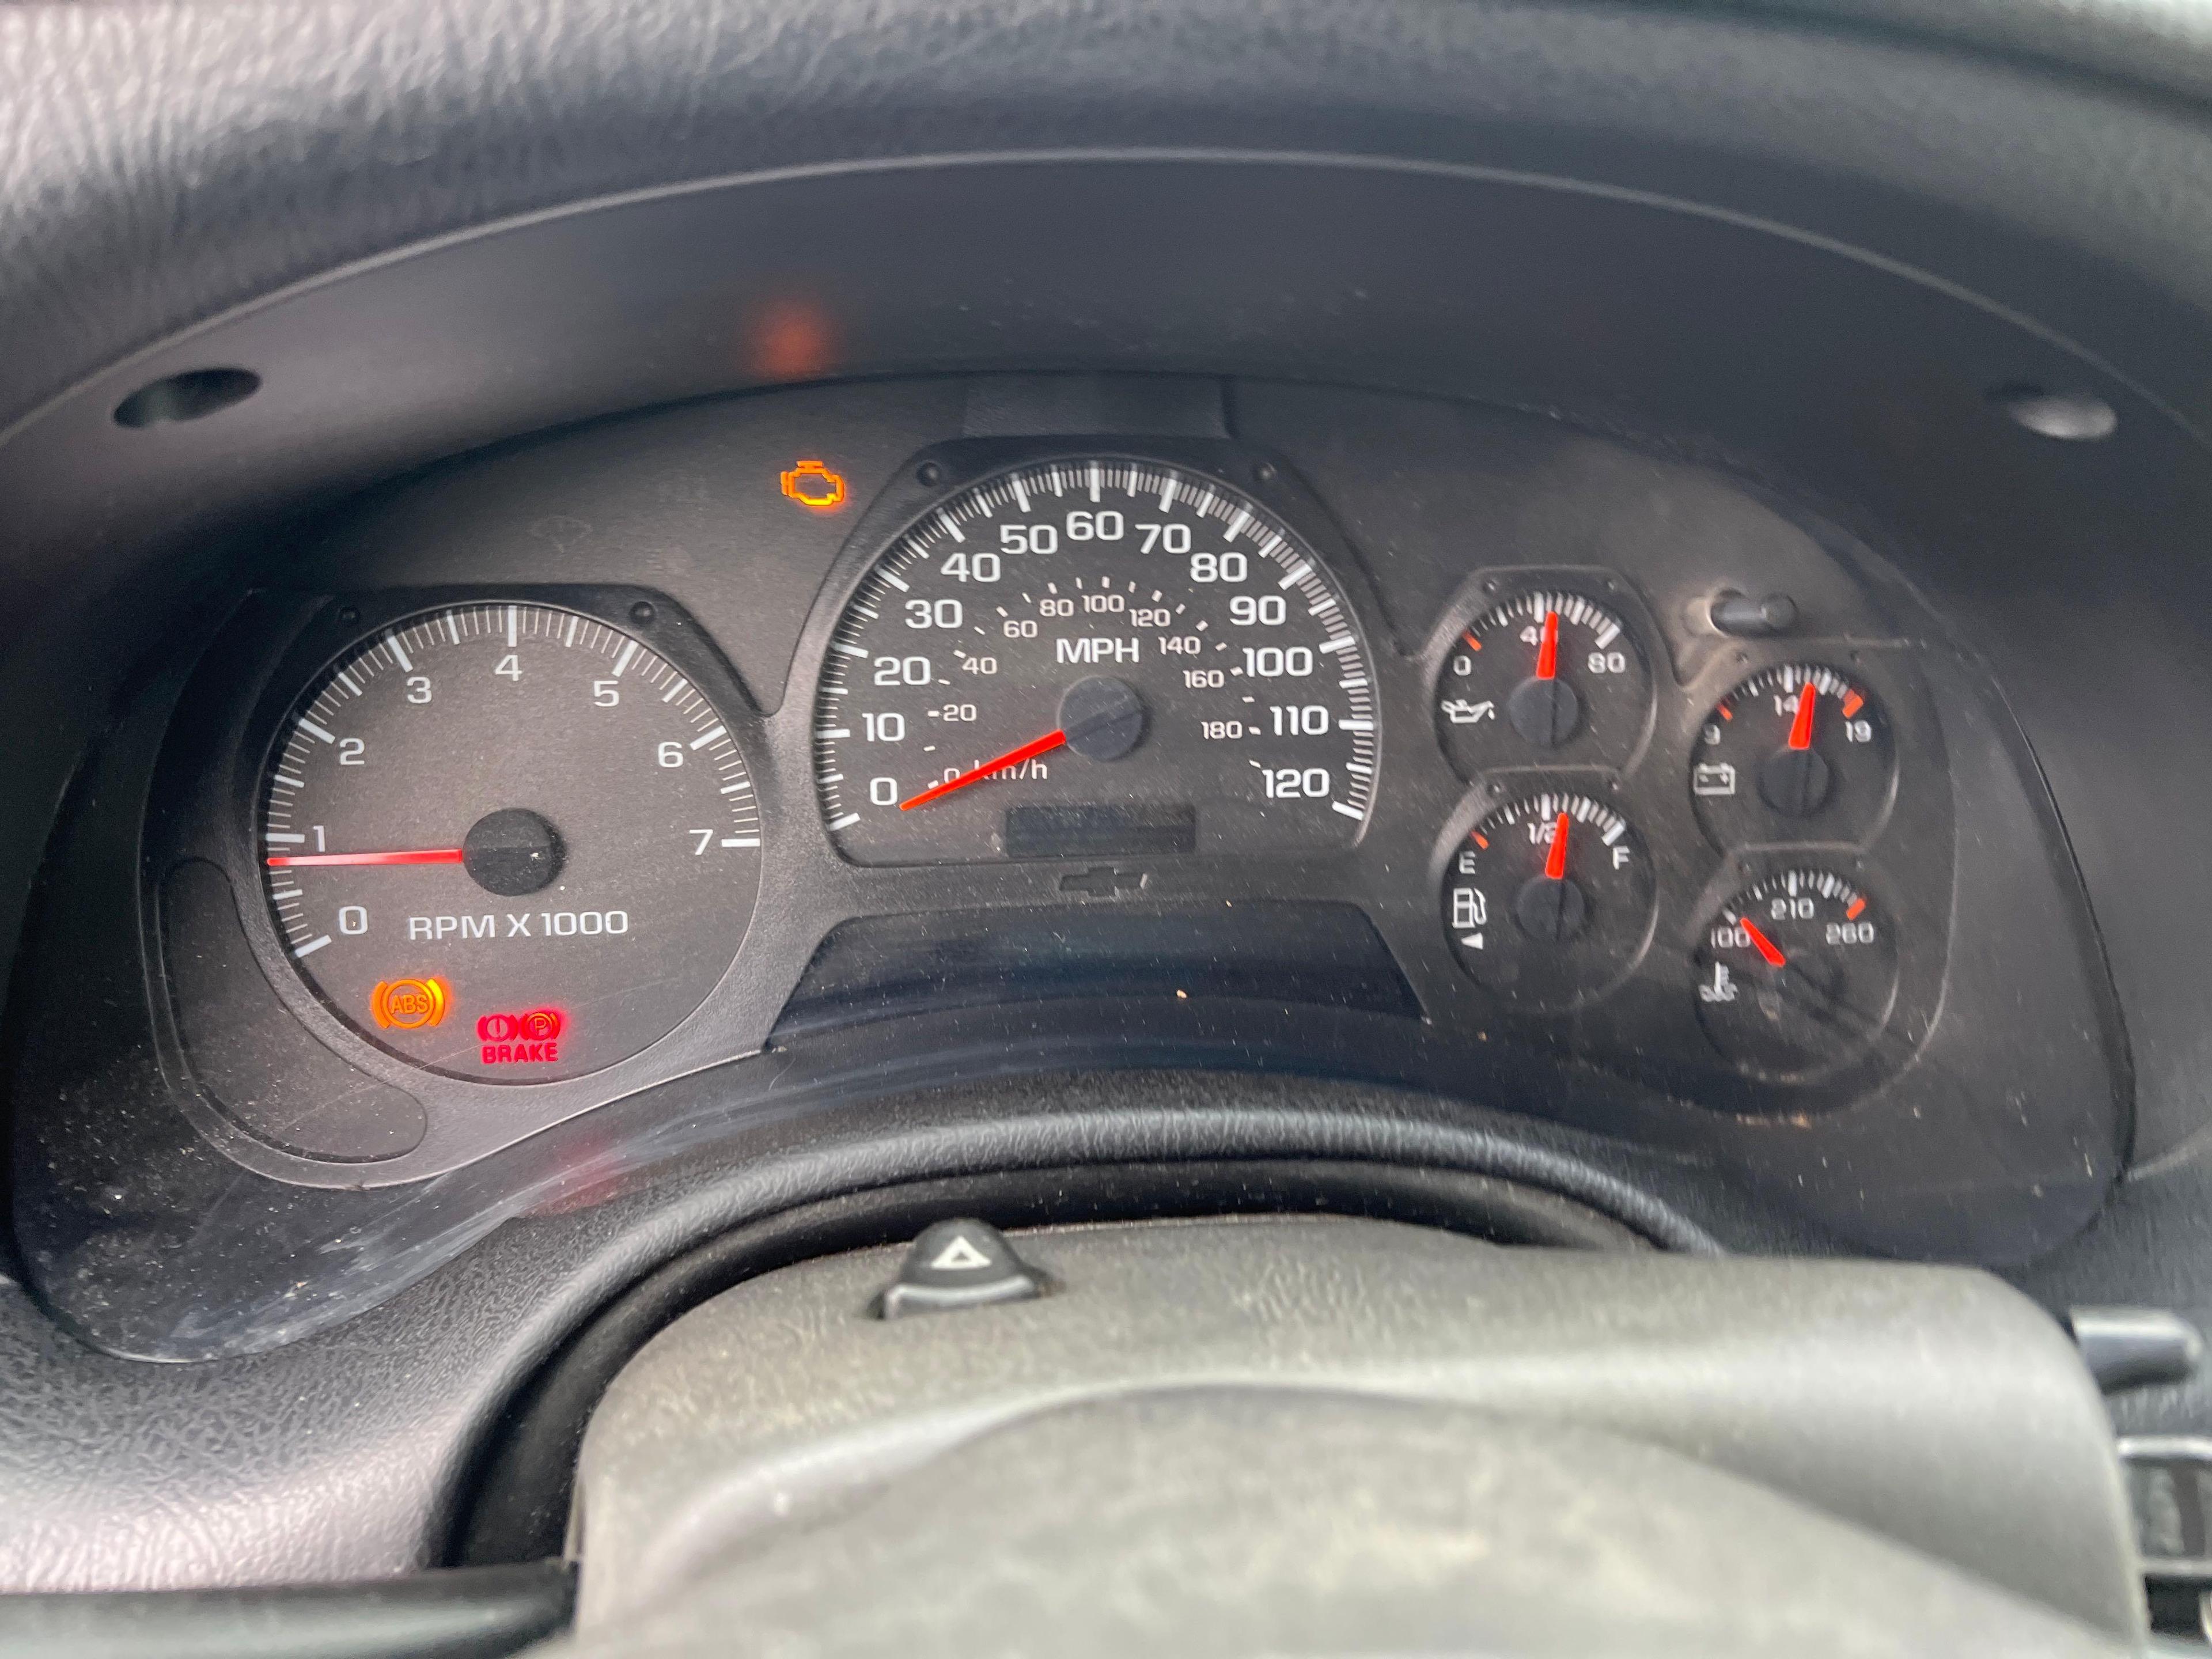 2005 Chevy Trailblazer 4x4 - Miles Unknown - Odometer does not work